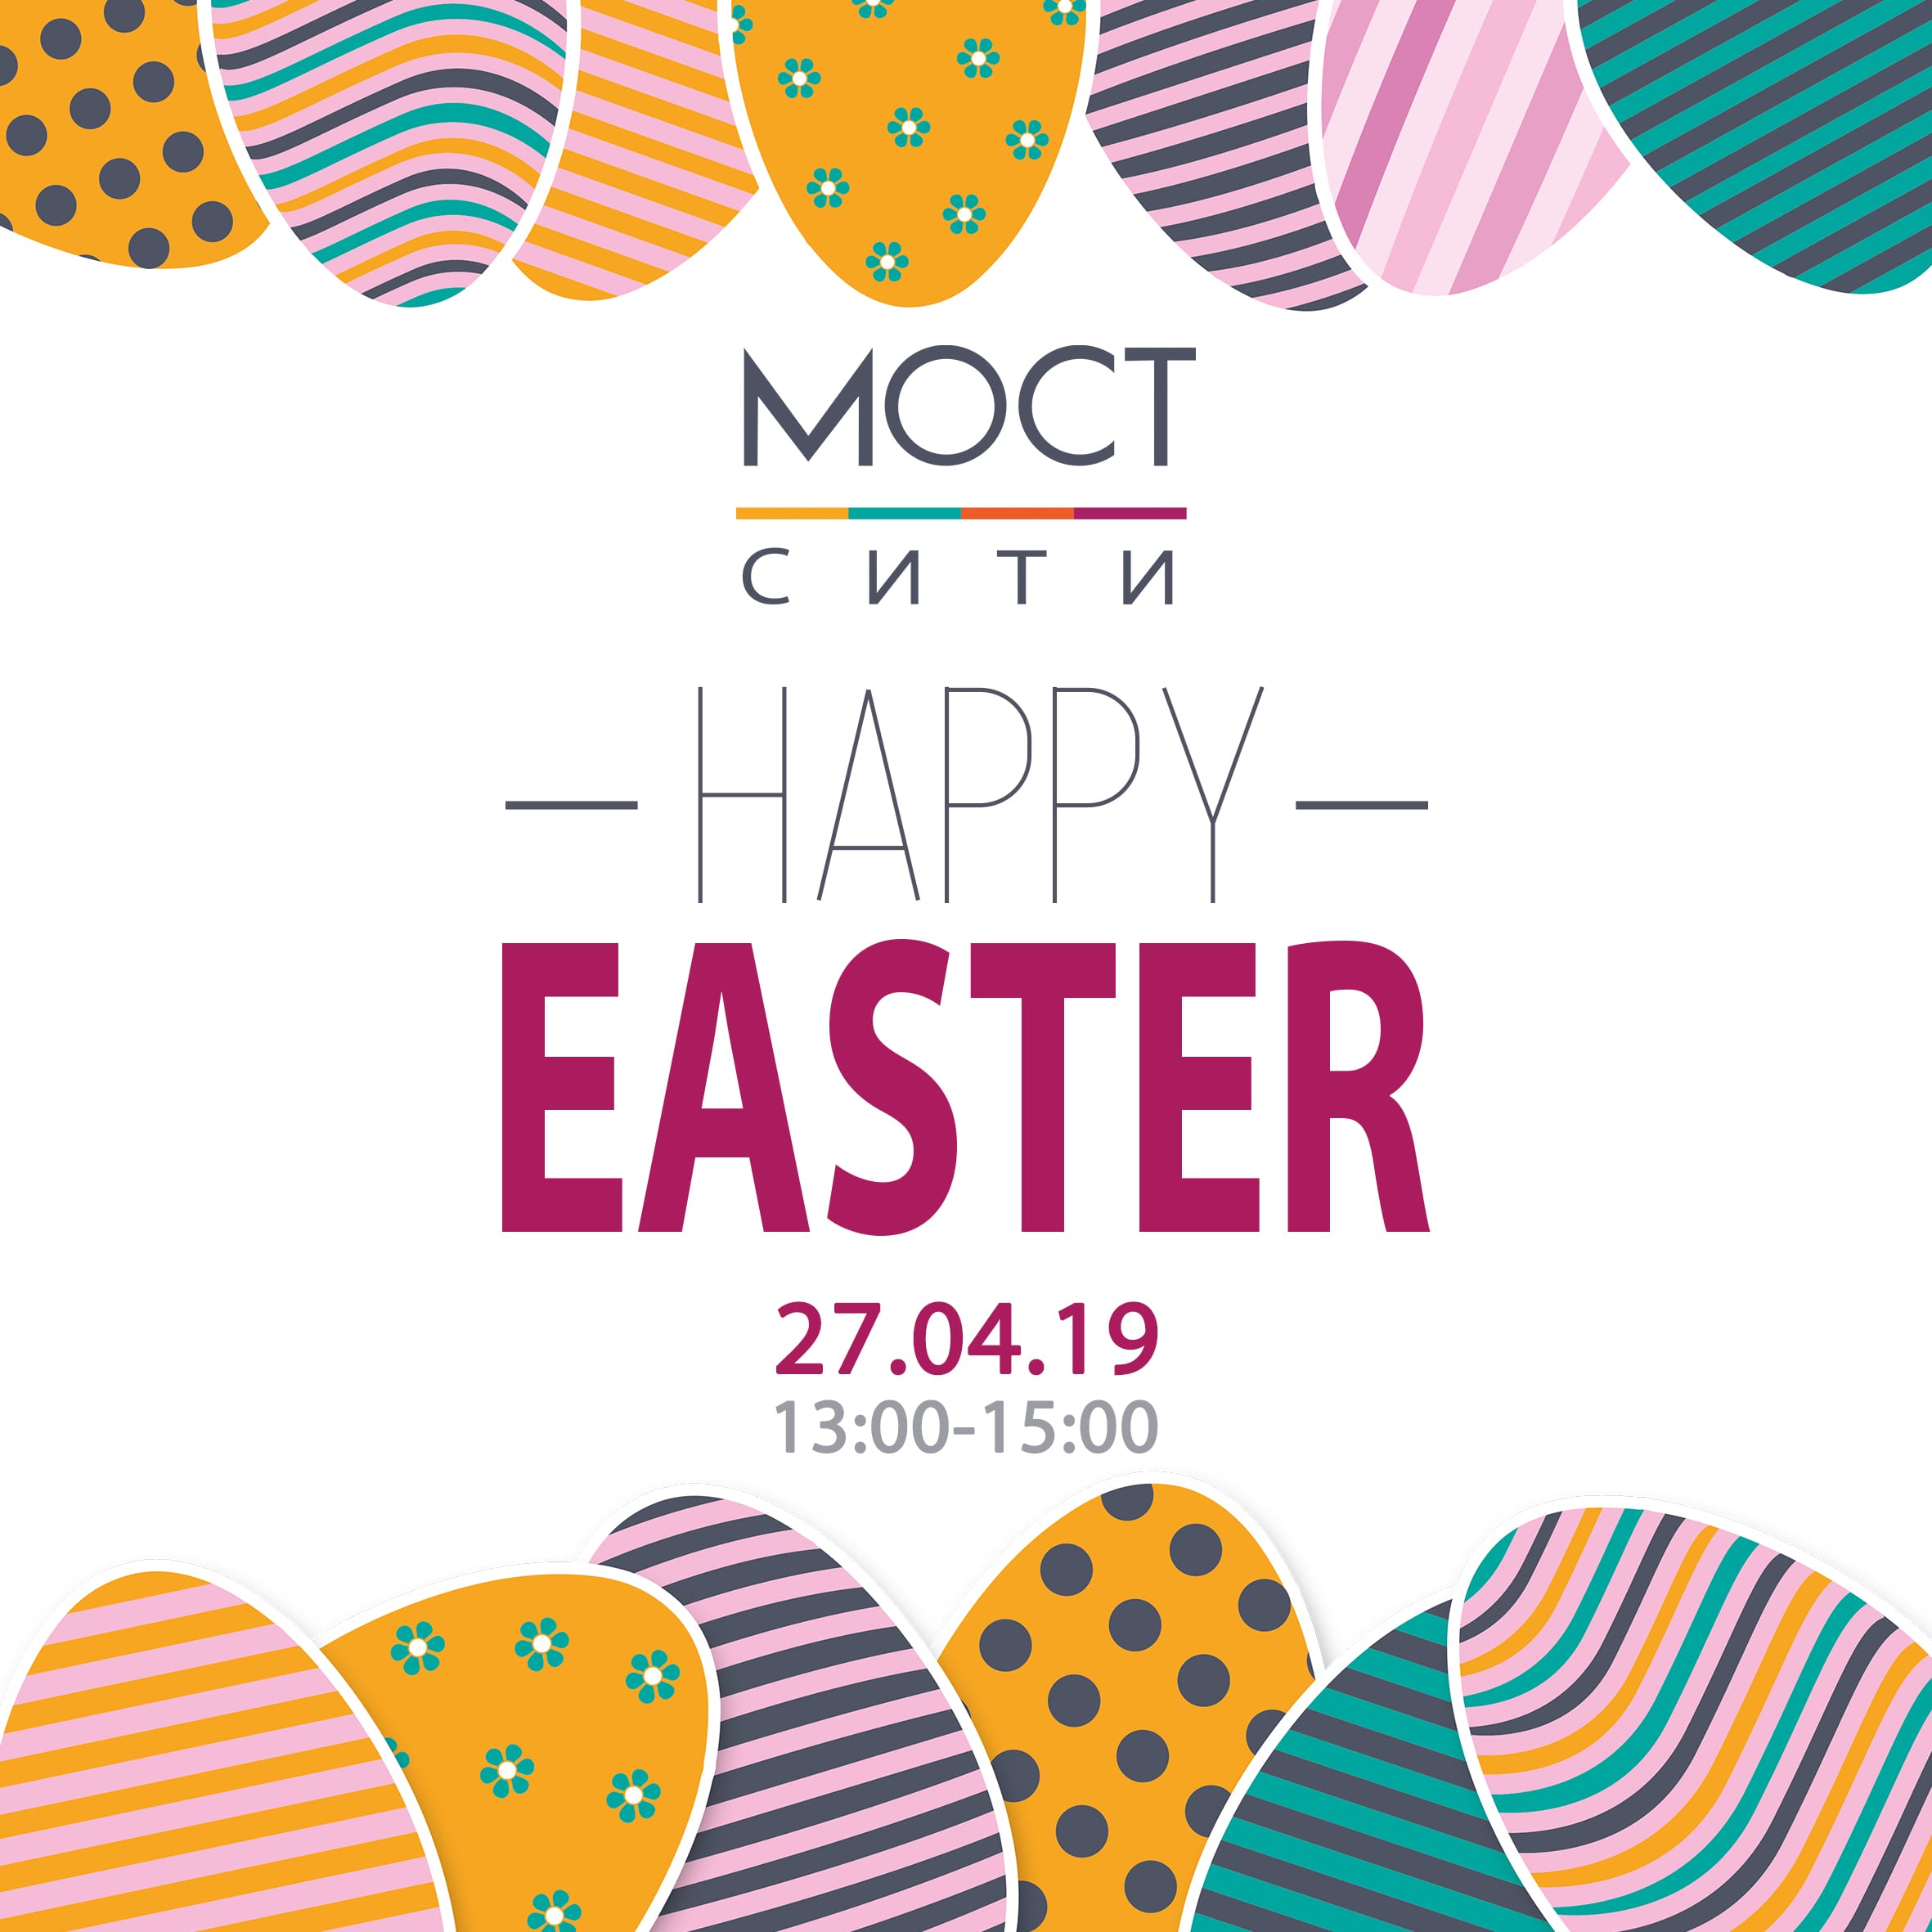 Happy Easter в ТРК Мост-Сити Днепр, 27.04.2019, цена, купить билеты. Афиша Днепра